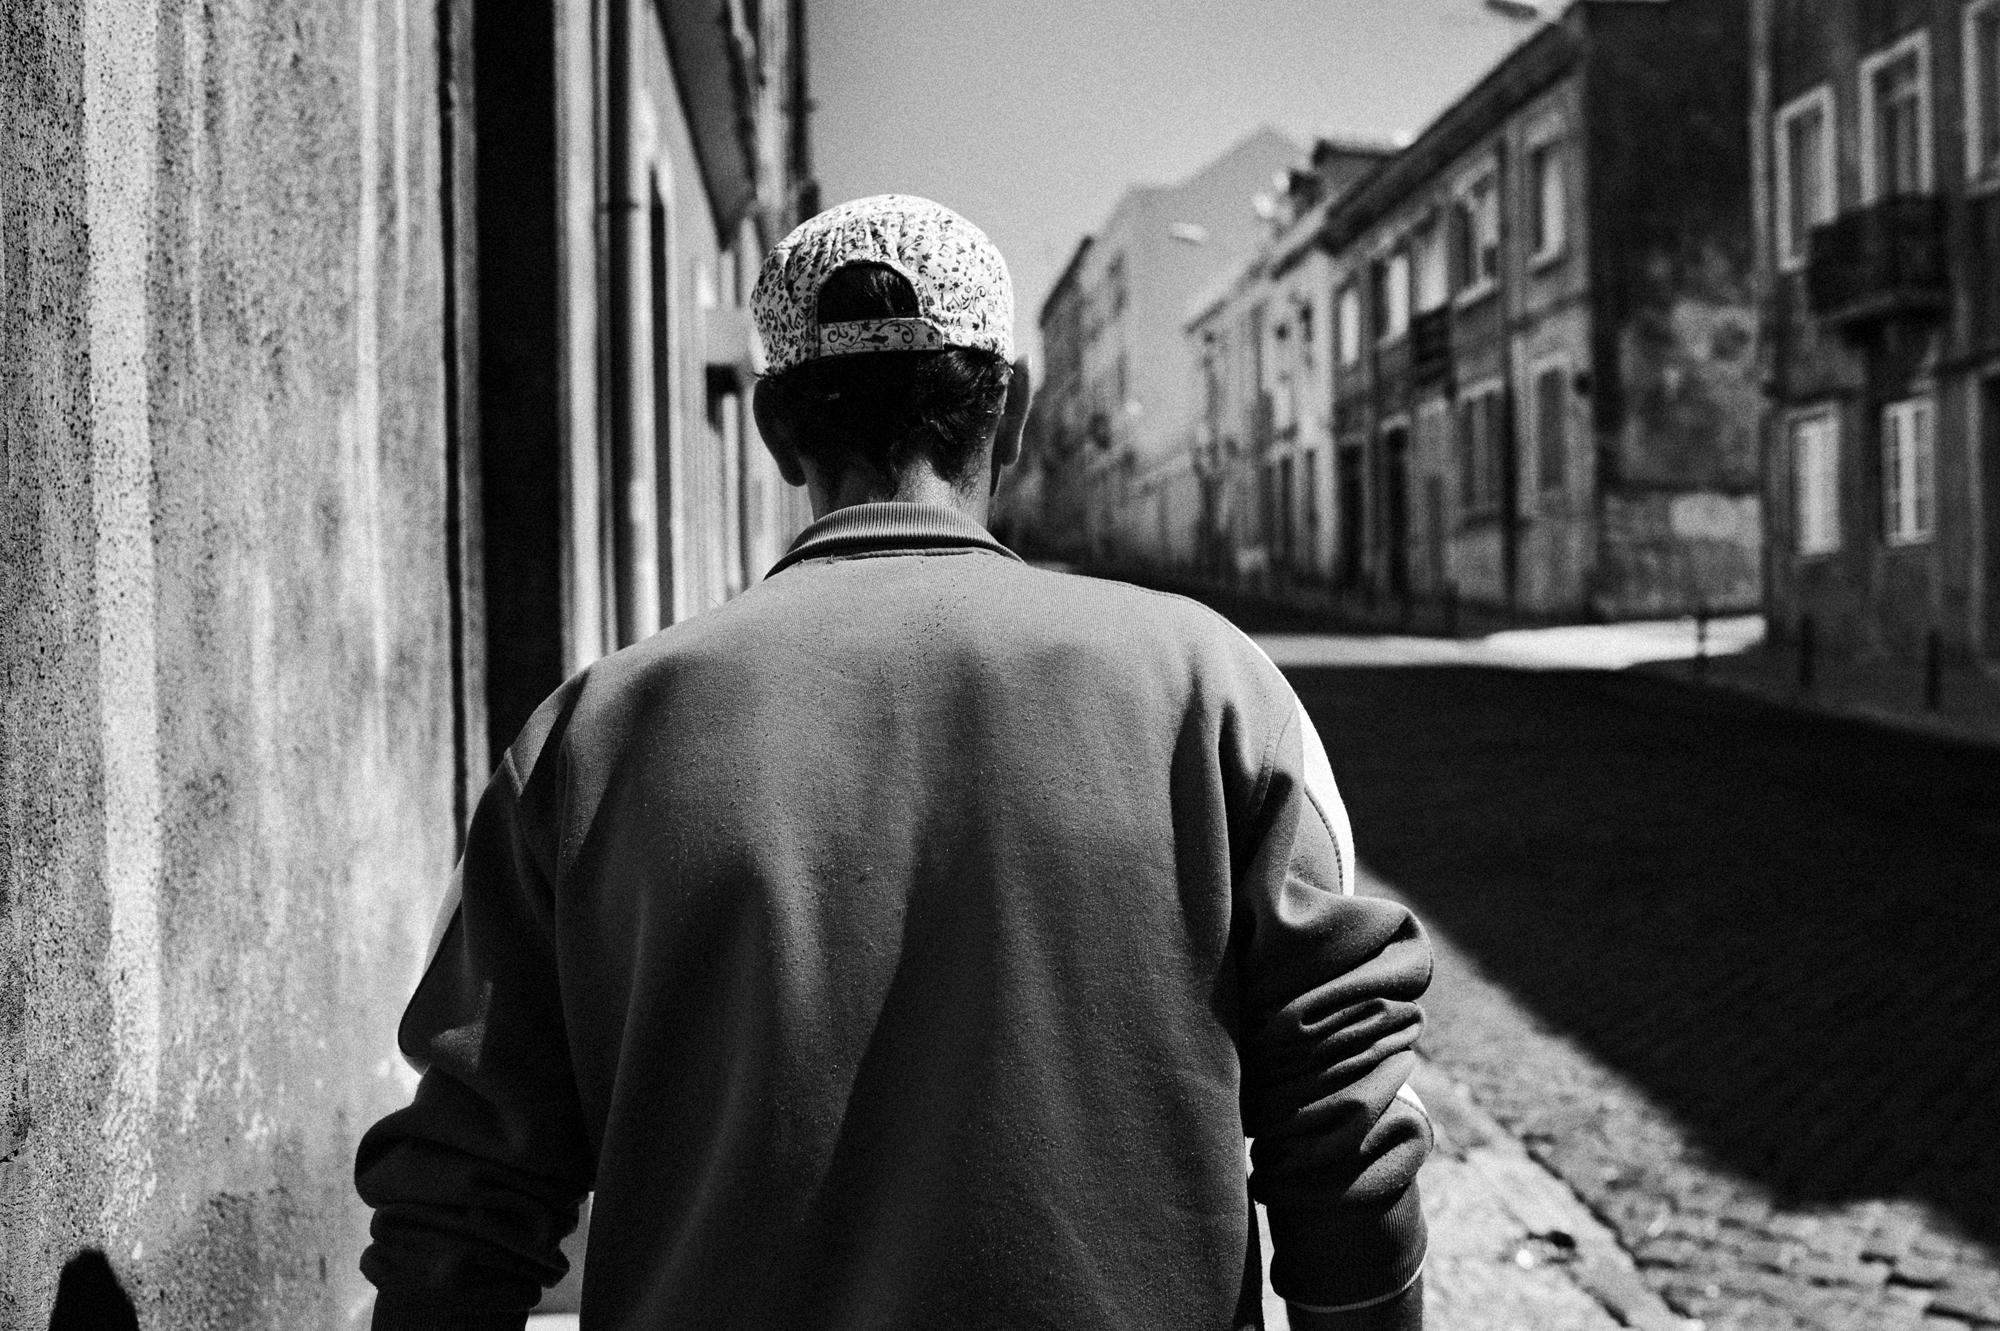 PortugalÂ´s drug decriminalization - Casal Ventoso, Lisbon, Portugal.
July 2011.
Nuno on his...